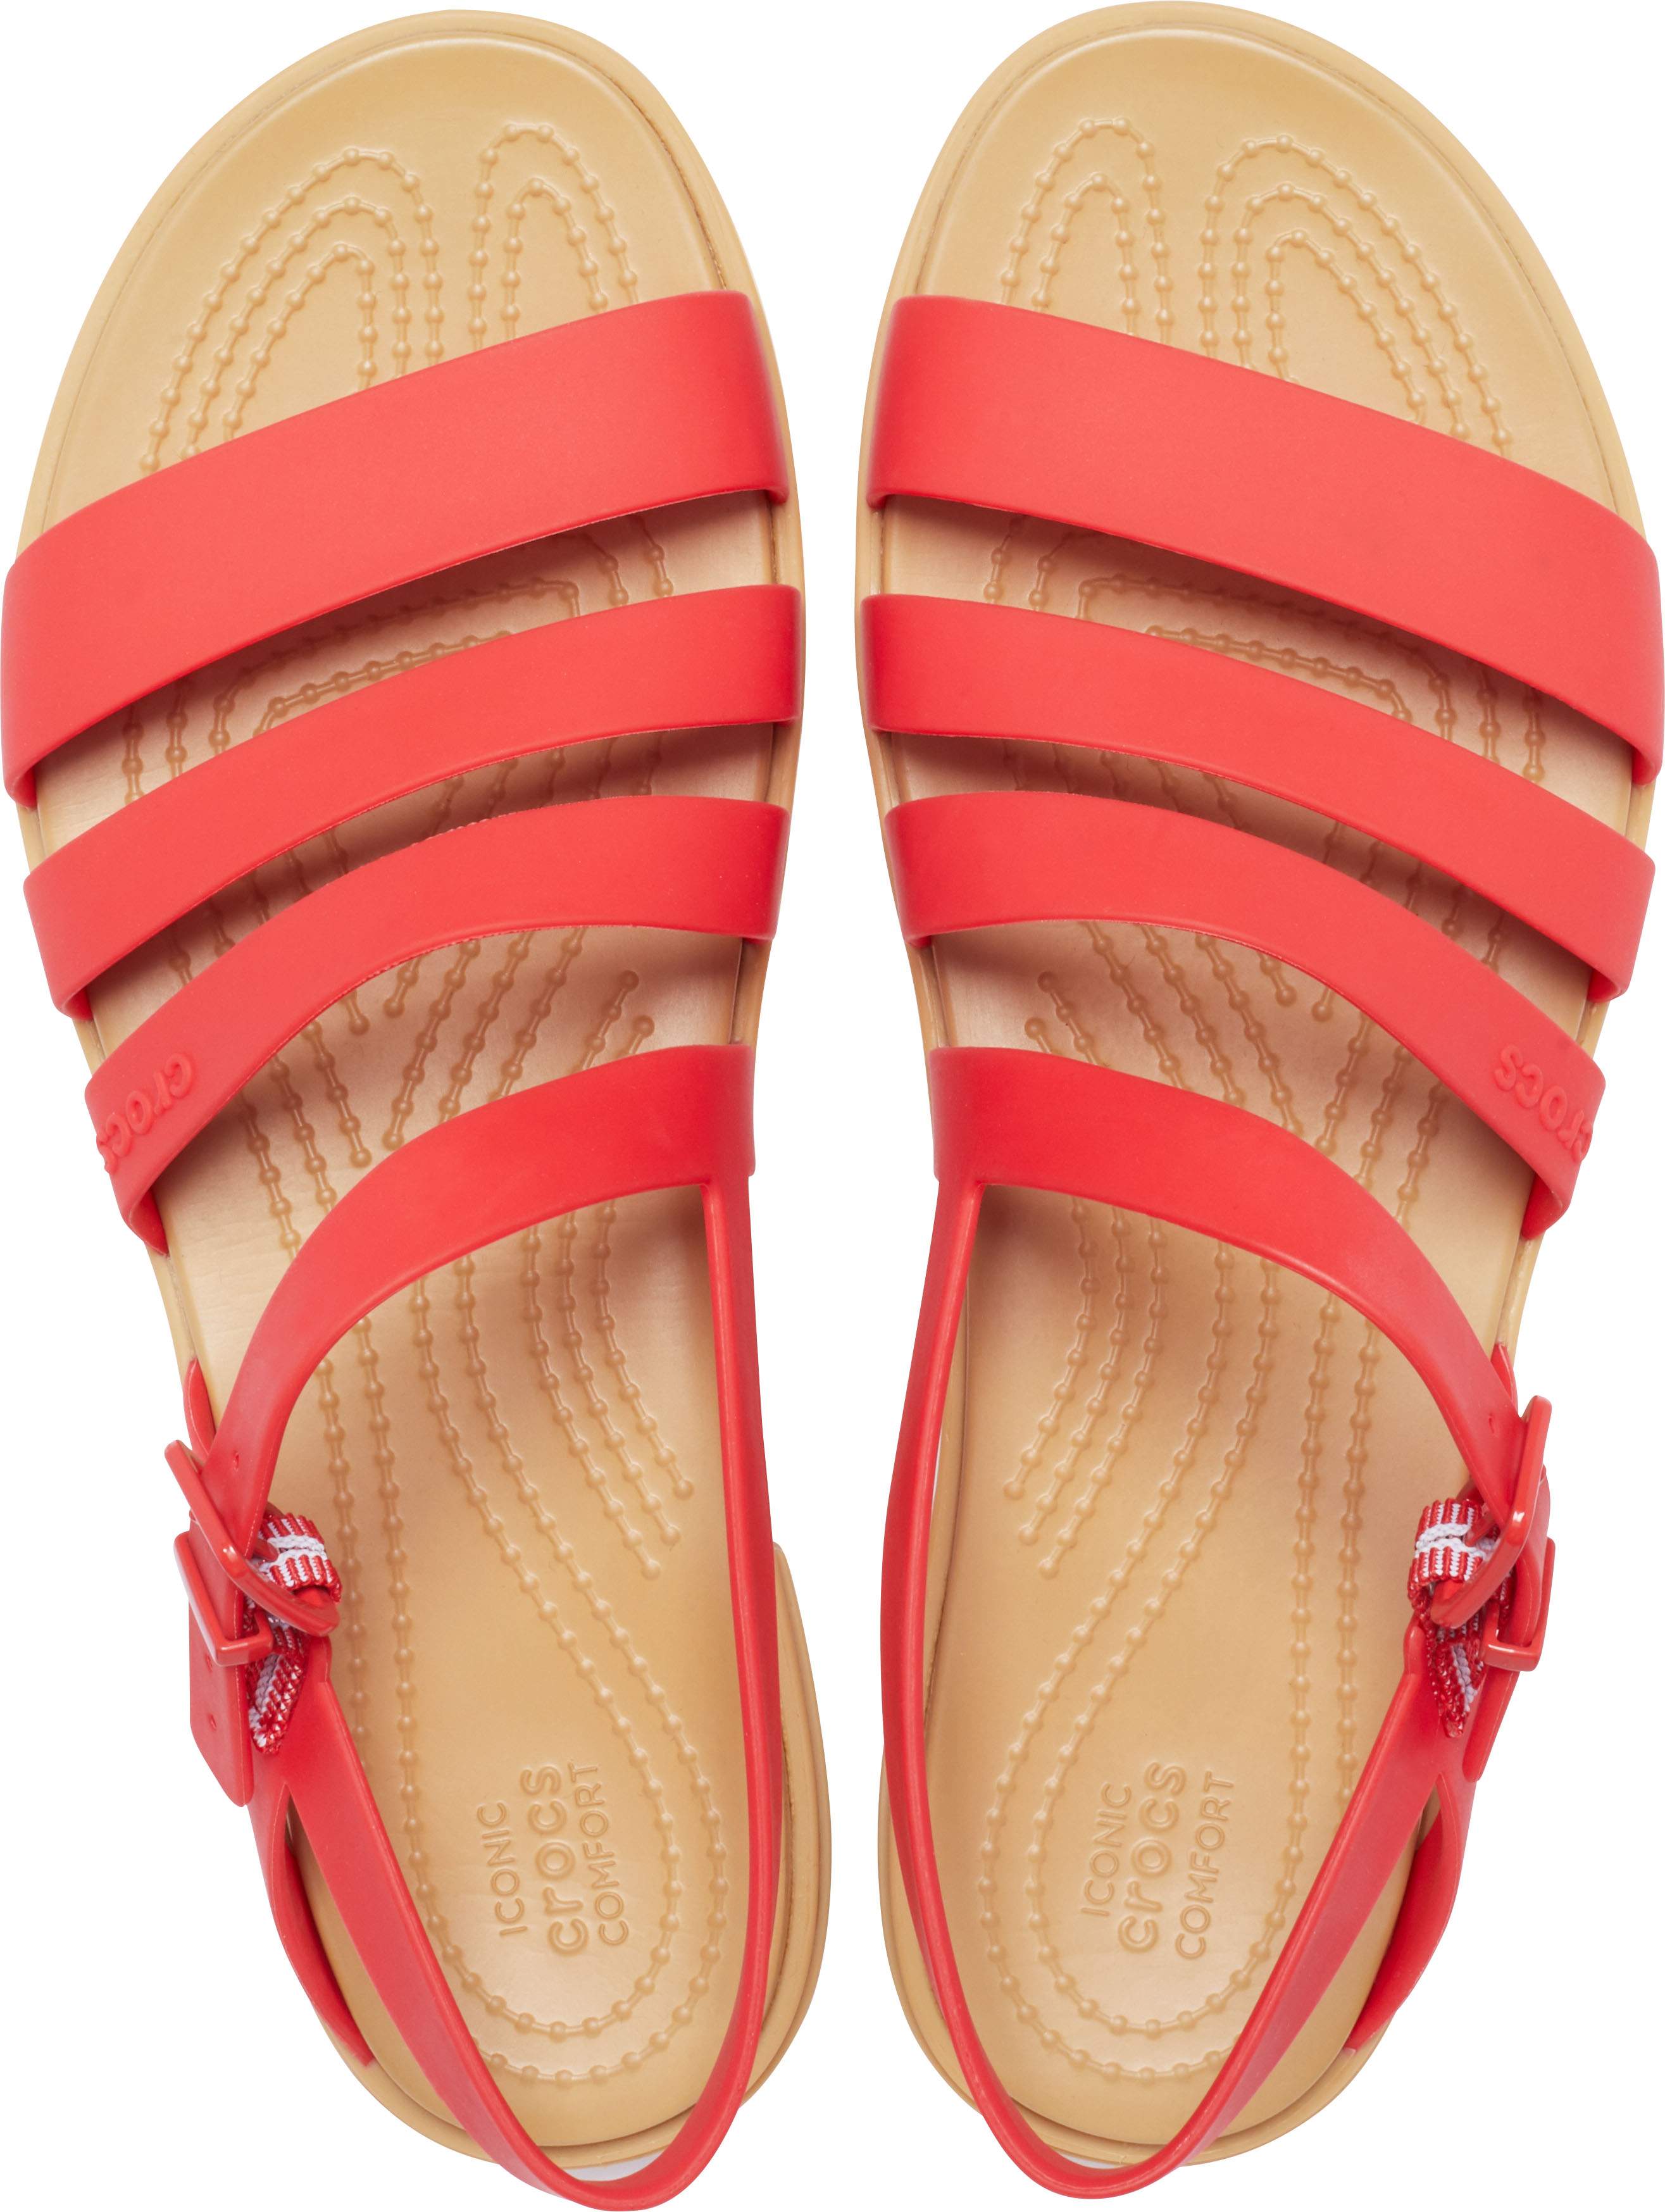 crocs women's tulum sandal